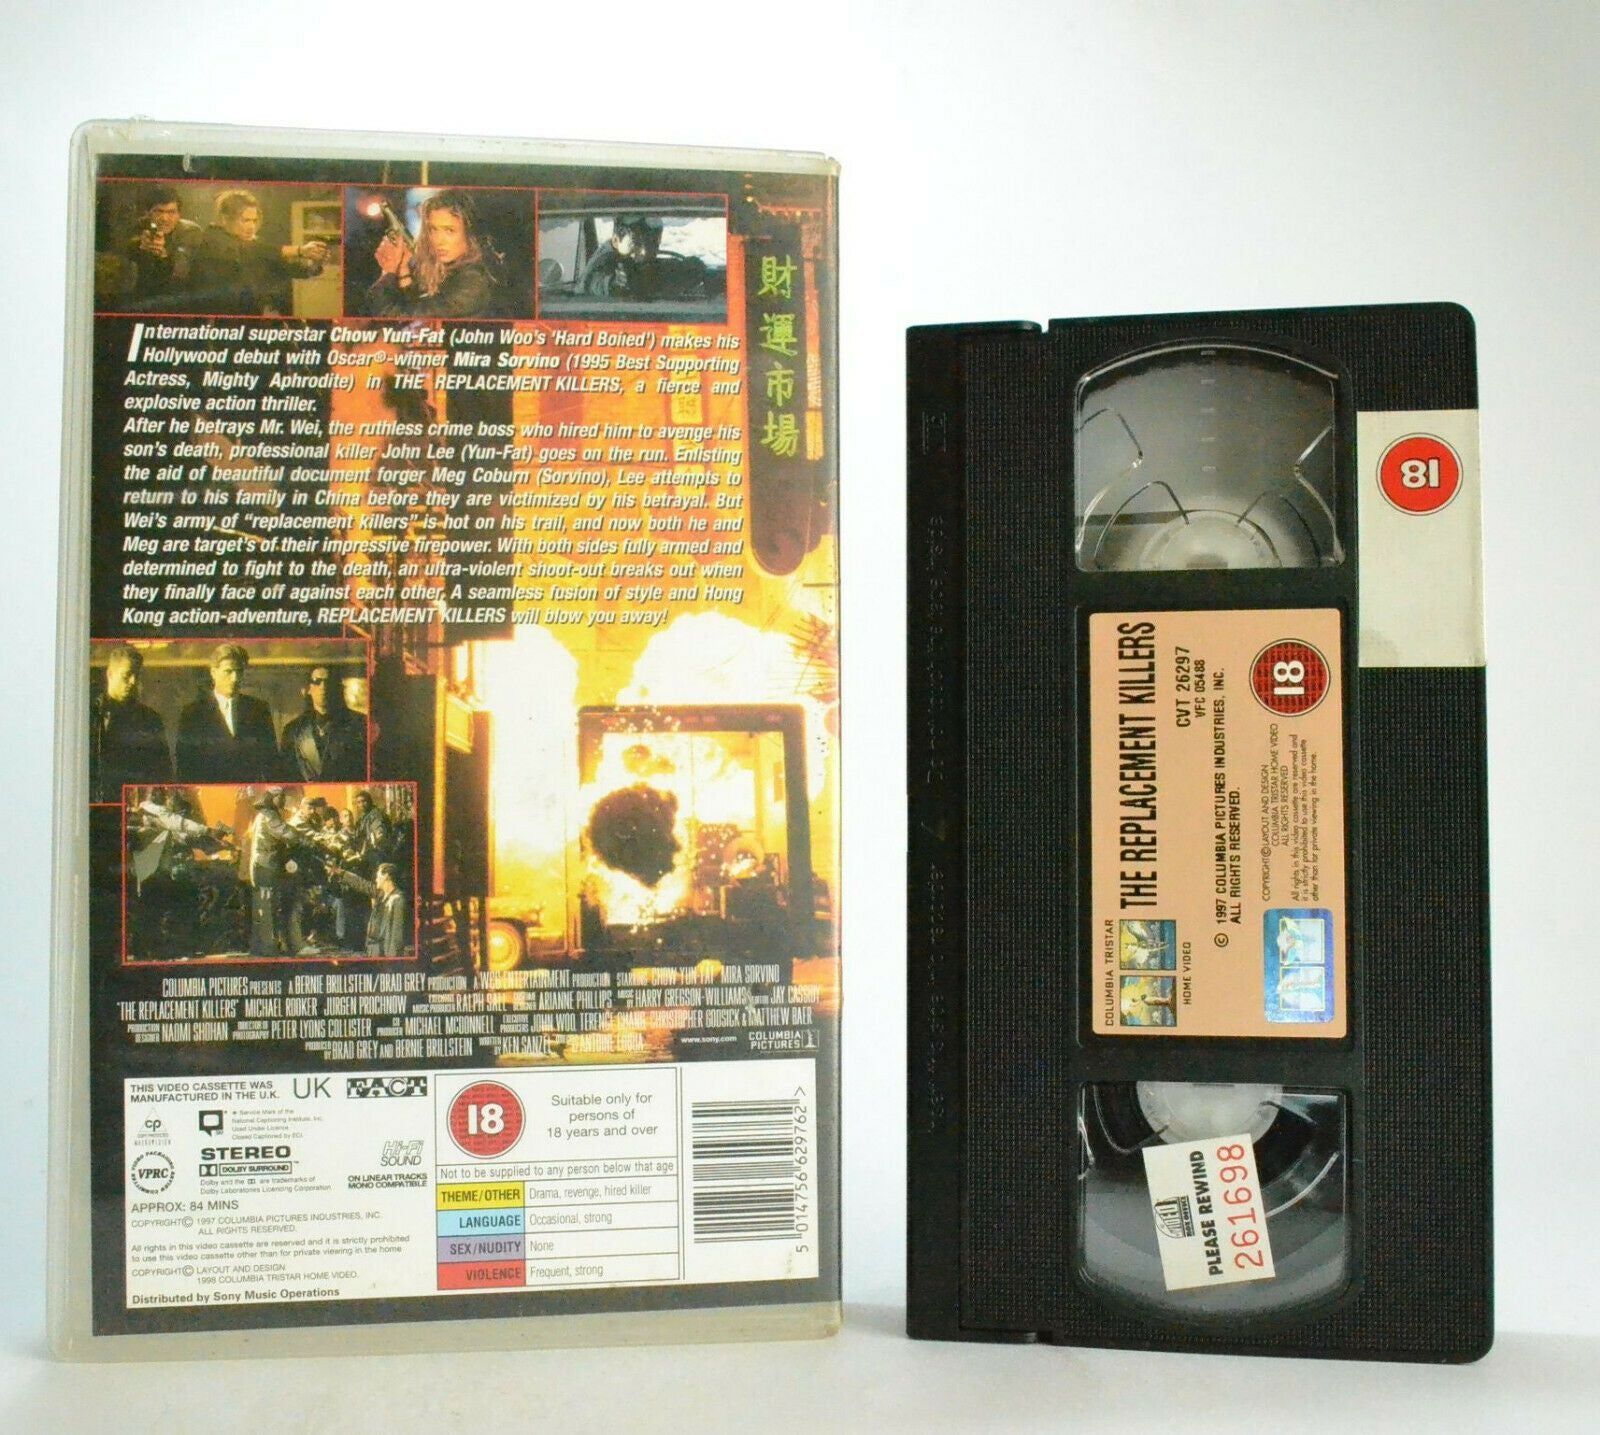 THE REPLACEMENT KILLERS: A John Woo - Chow Yun-Fat - Action - Big Box - Pal VHS-